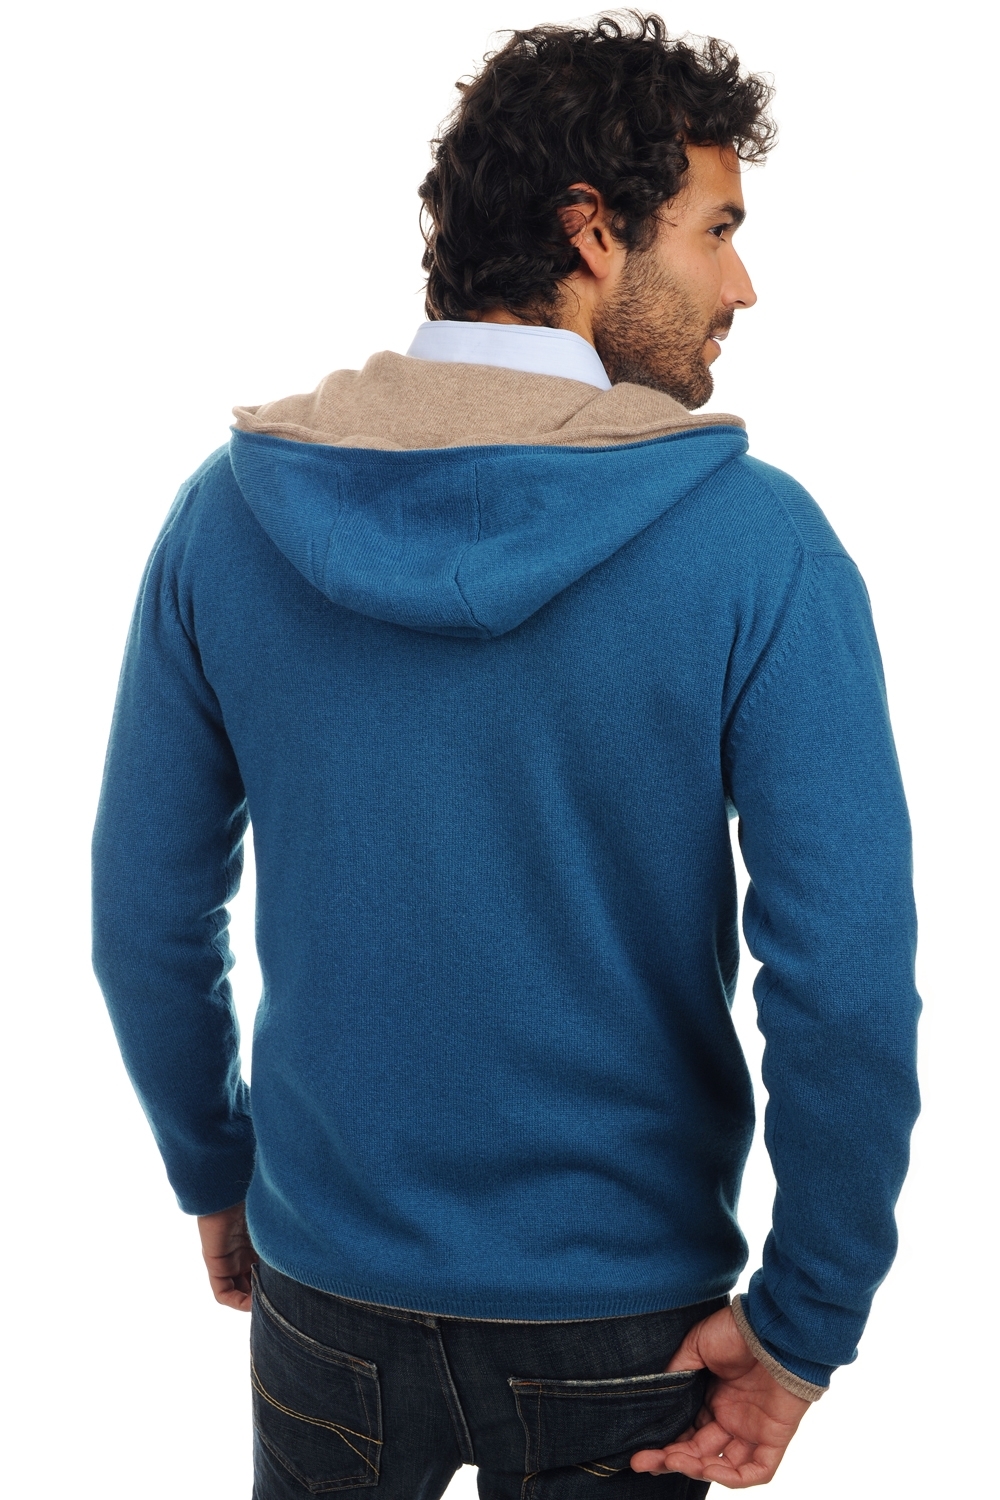 Cashmere men waistcoat sleeveless sweaters carson canard blue   natural brown m